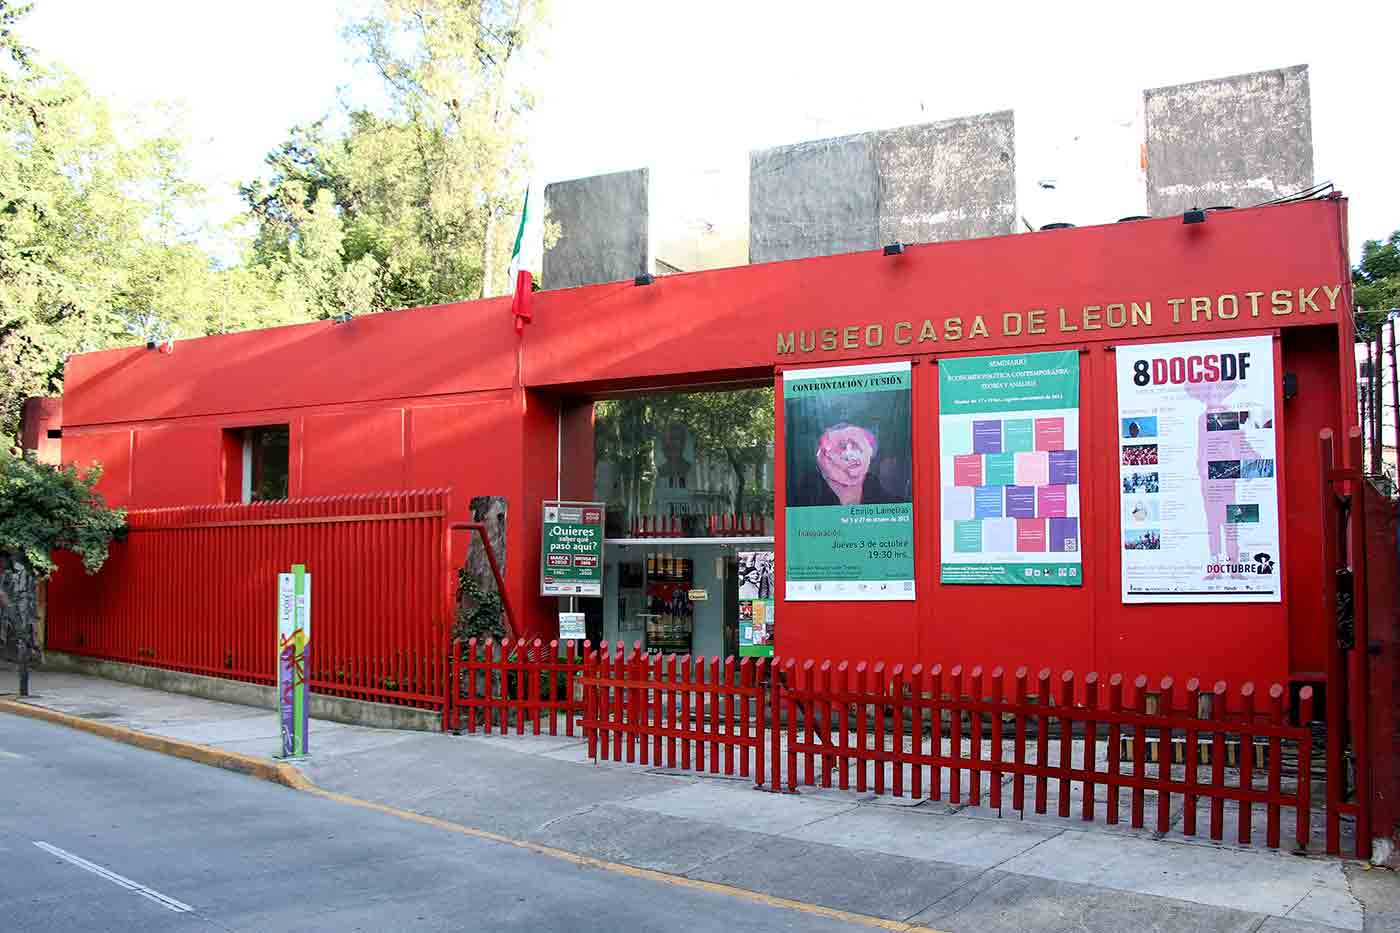 Leon Trotsky Museum